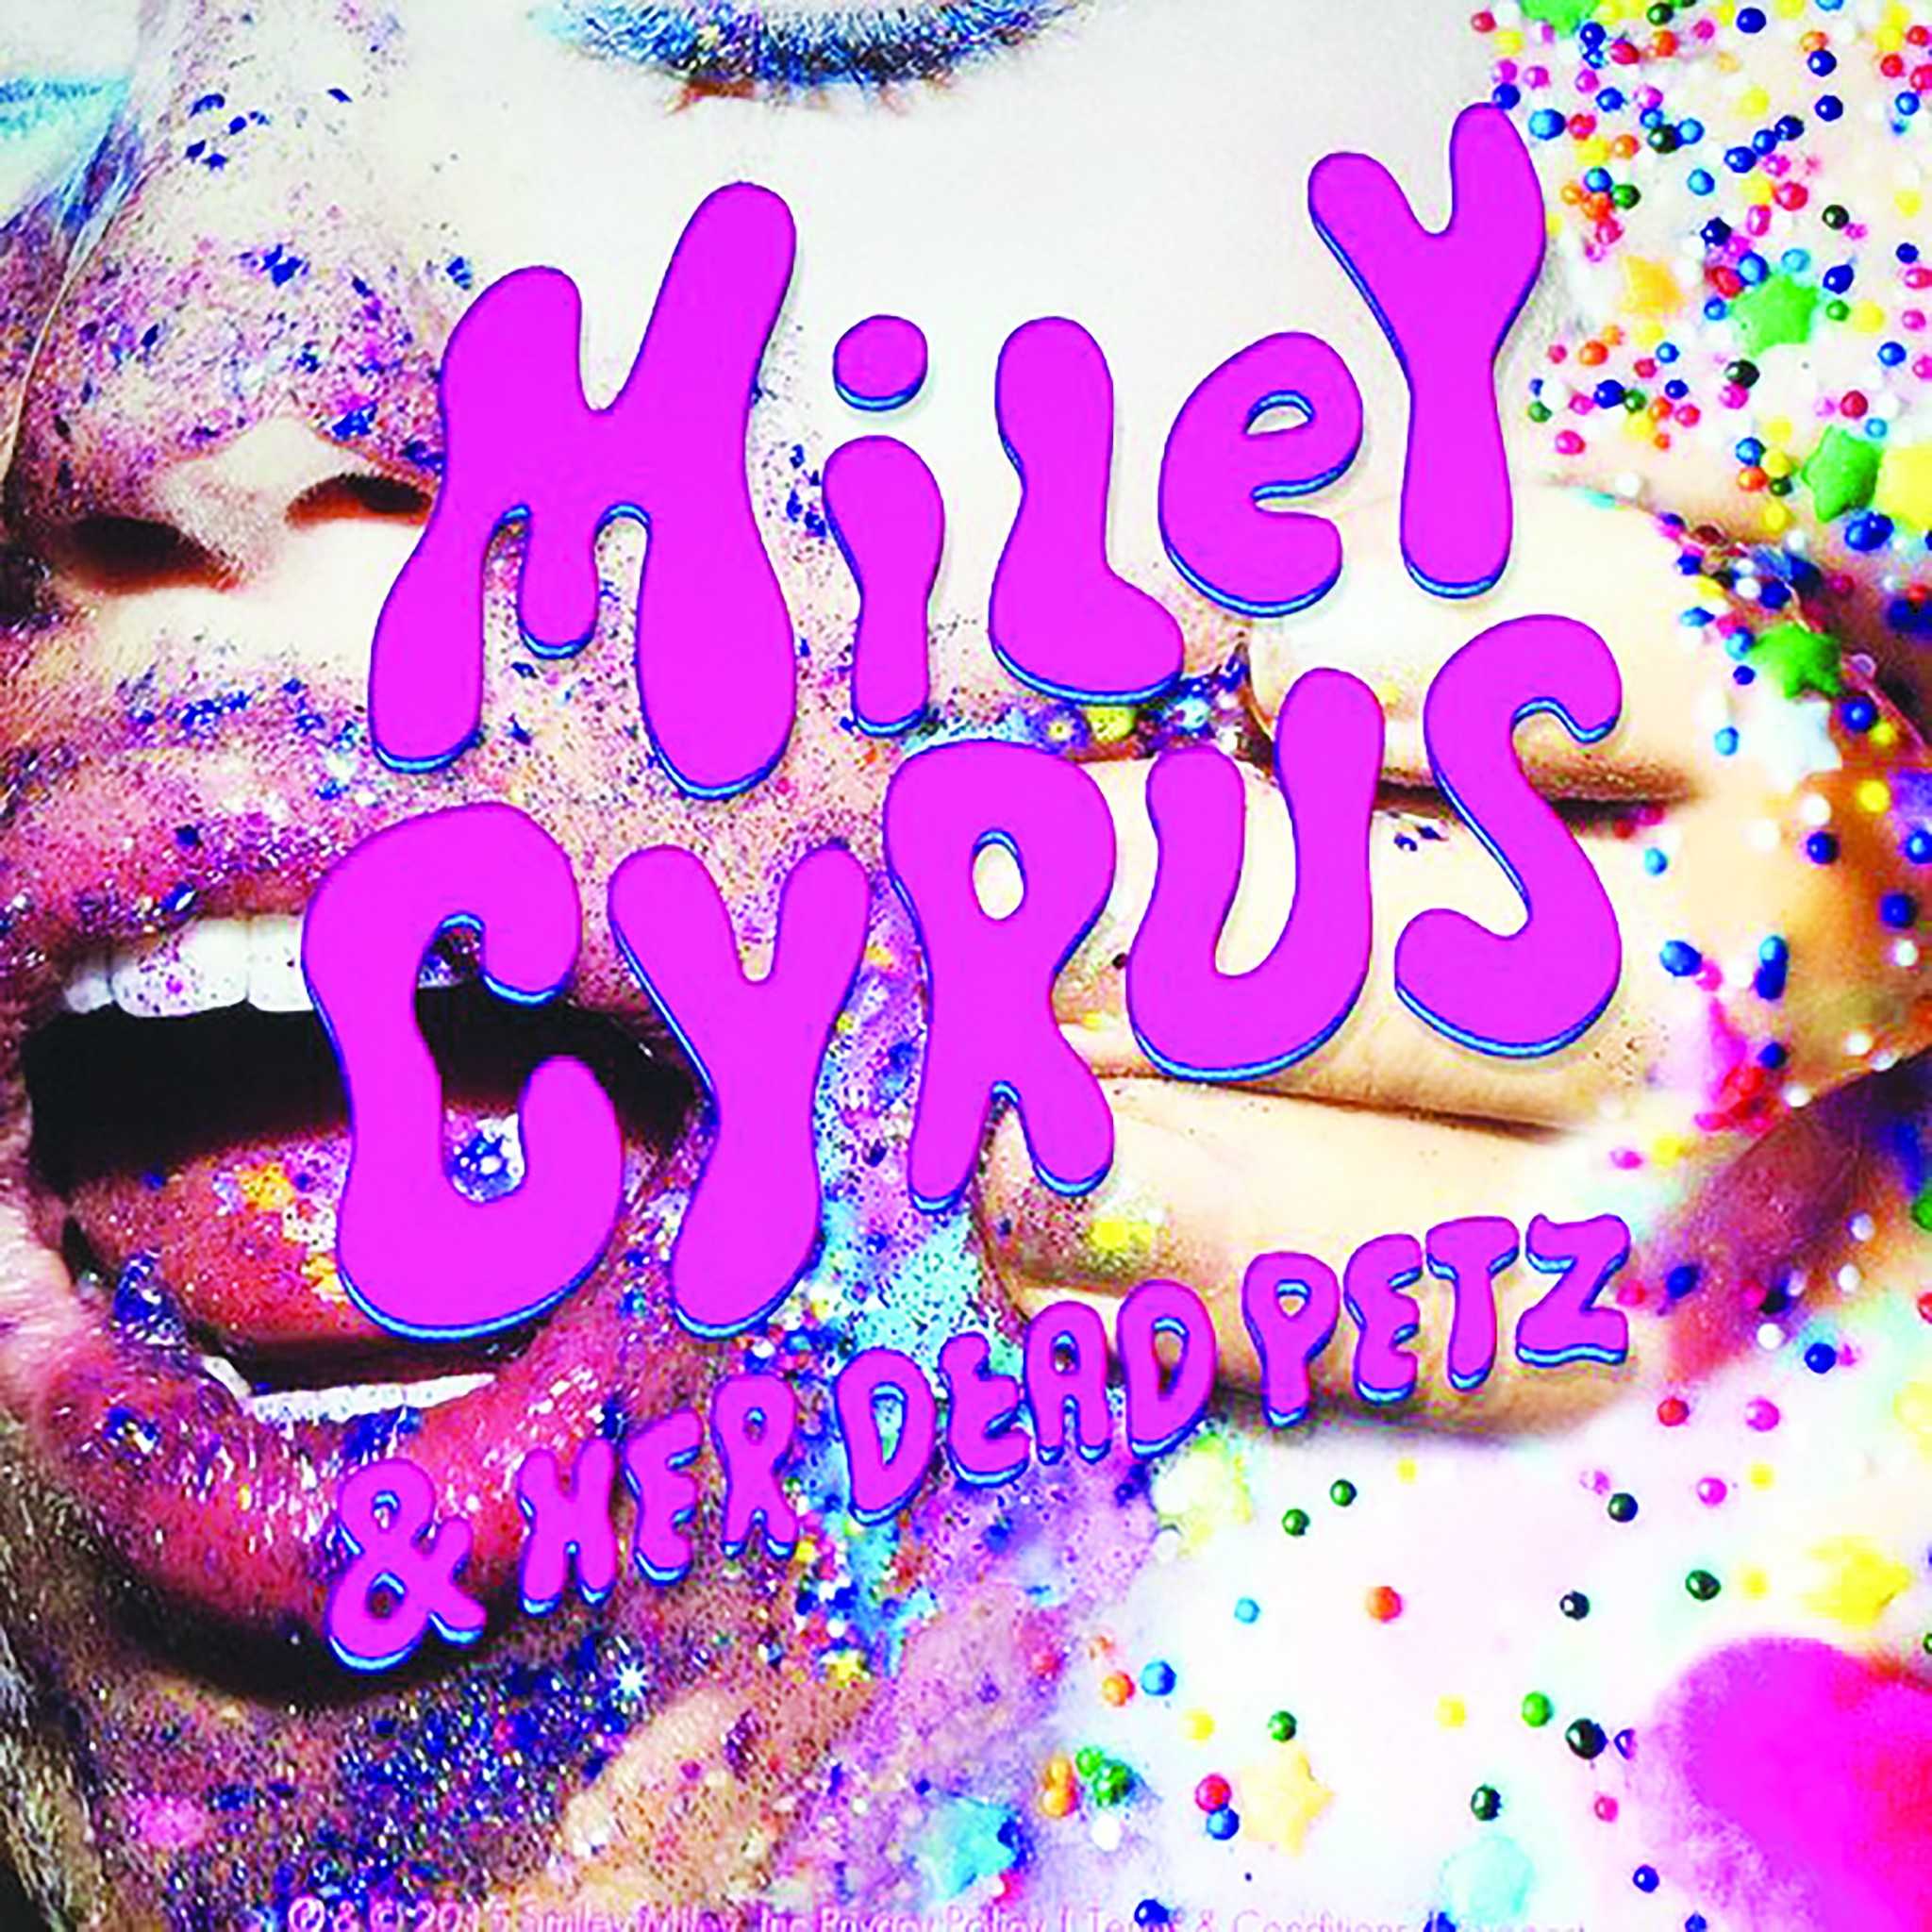 Miley Cyrus gets weird on new surprise album